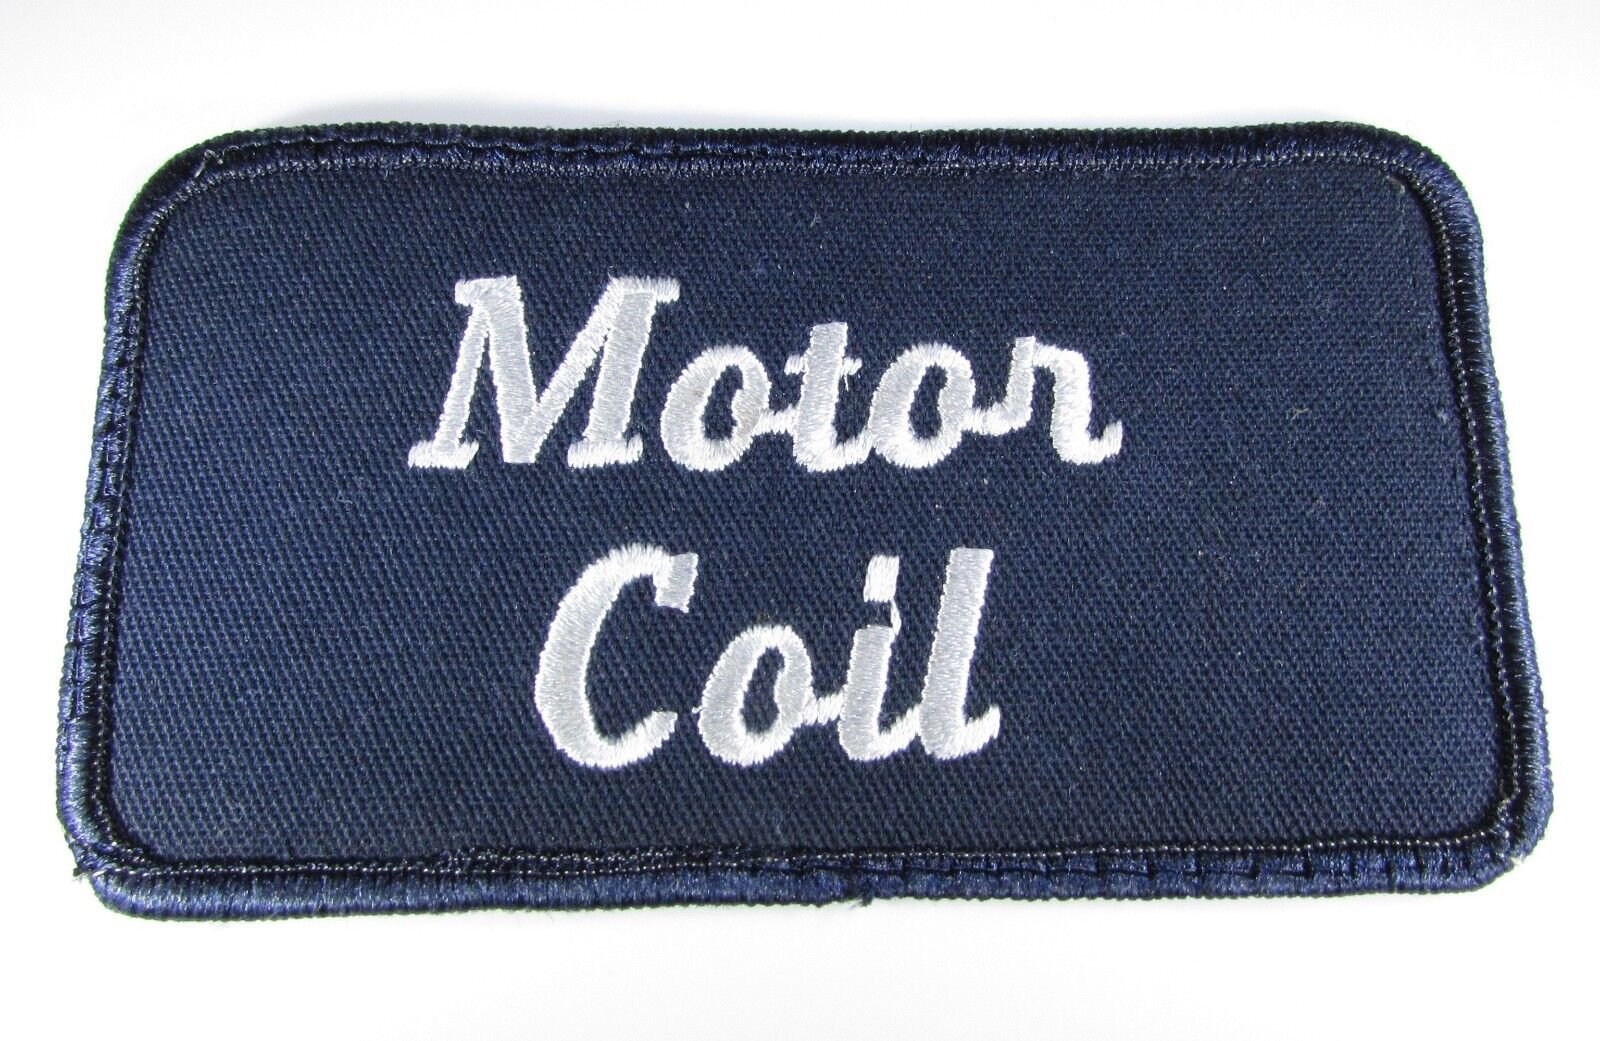 Vintage Motor Coil Patch